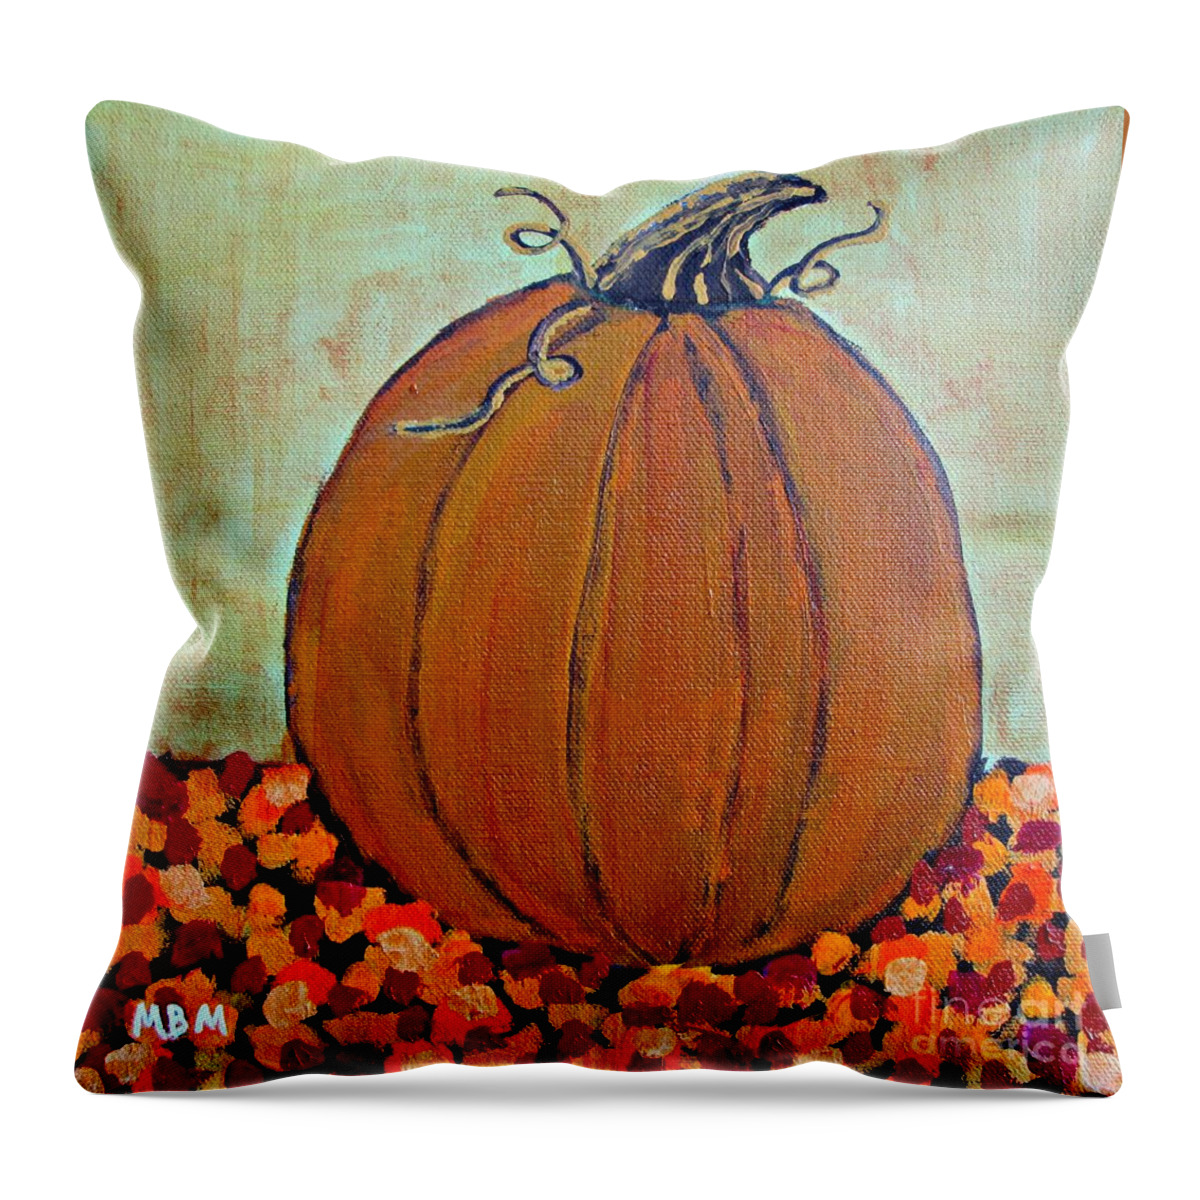 Pumpkin Throw Pillow featuring the painting Fall Pumpkin by Mary Mirabal